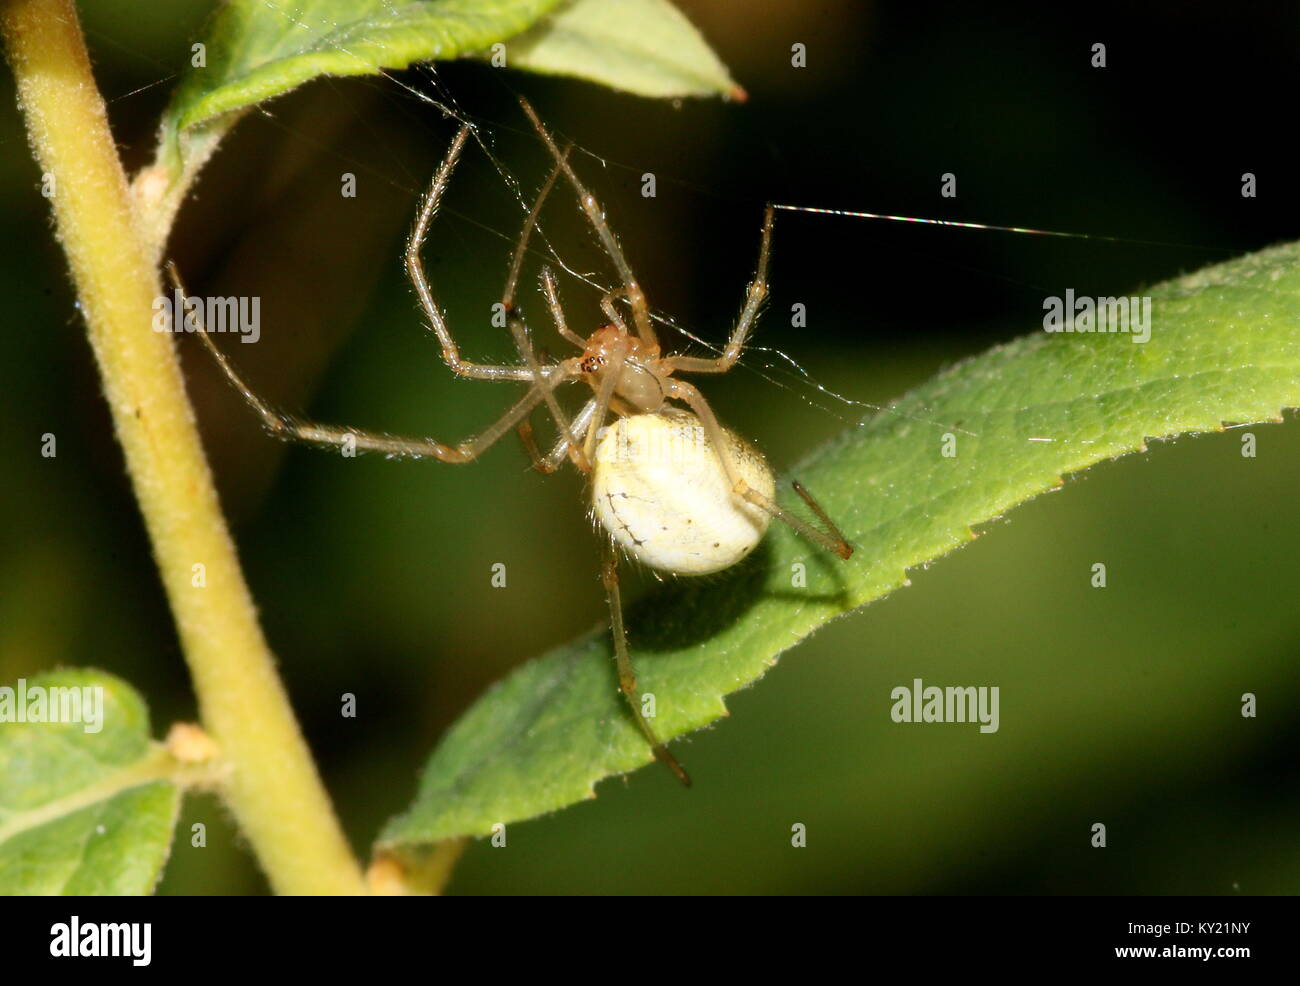 European Cucumber Green Spider (Araniella cucurbitina) in closeup. Stock Photo